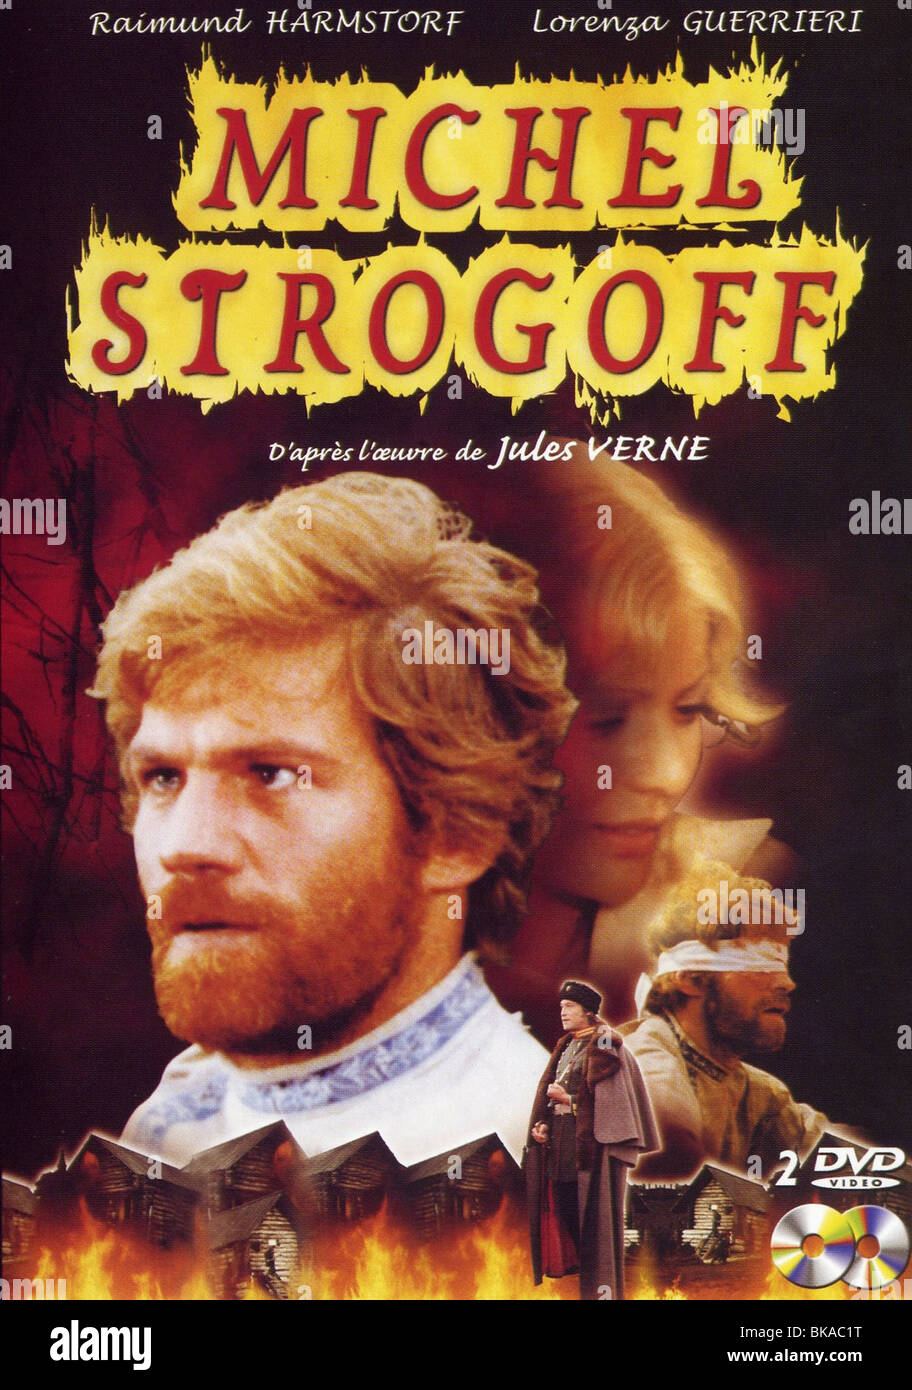 Michel Strogoff TV series 1975 - France / Belgium Raimund Harmstorf DVD  poster Stock Photo - Alamy